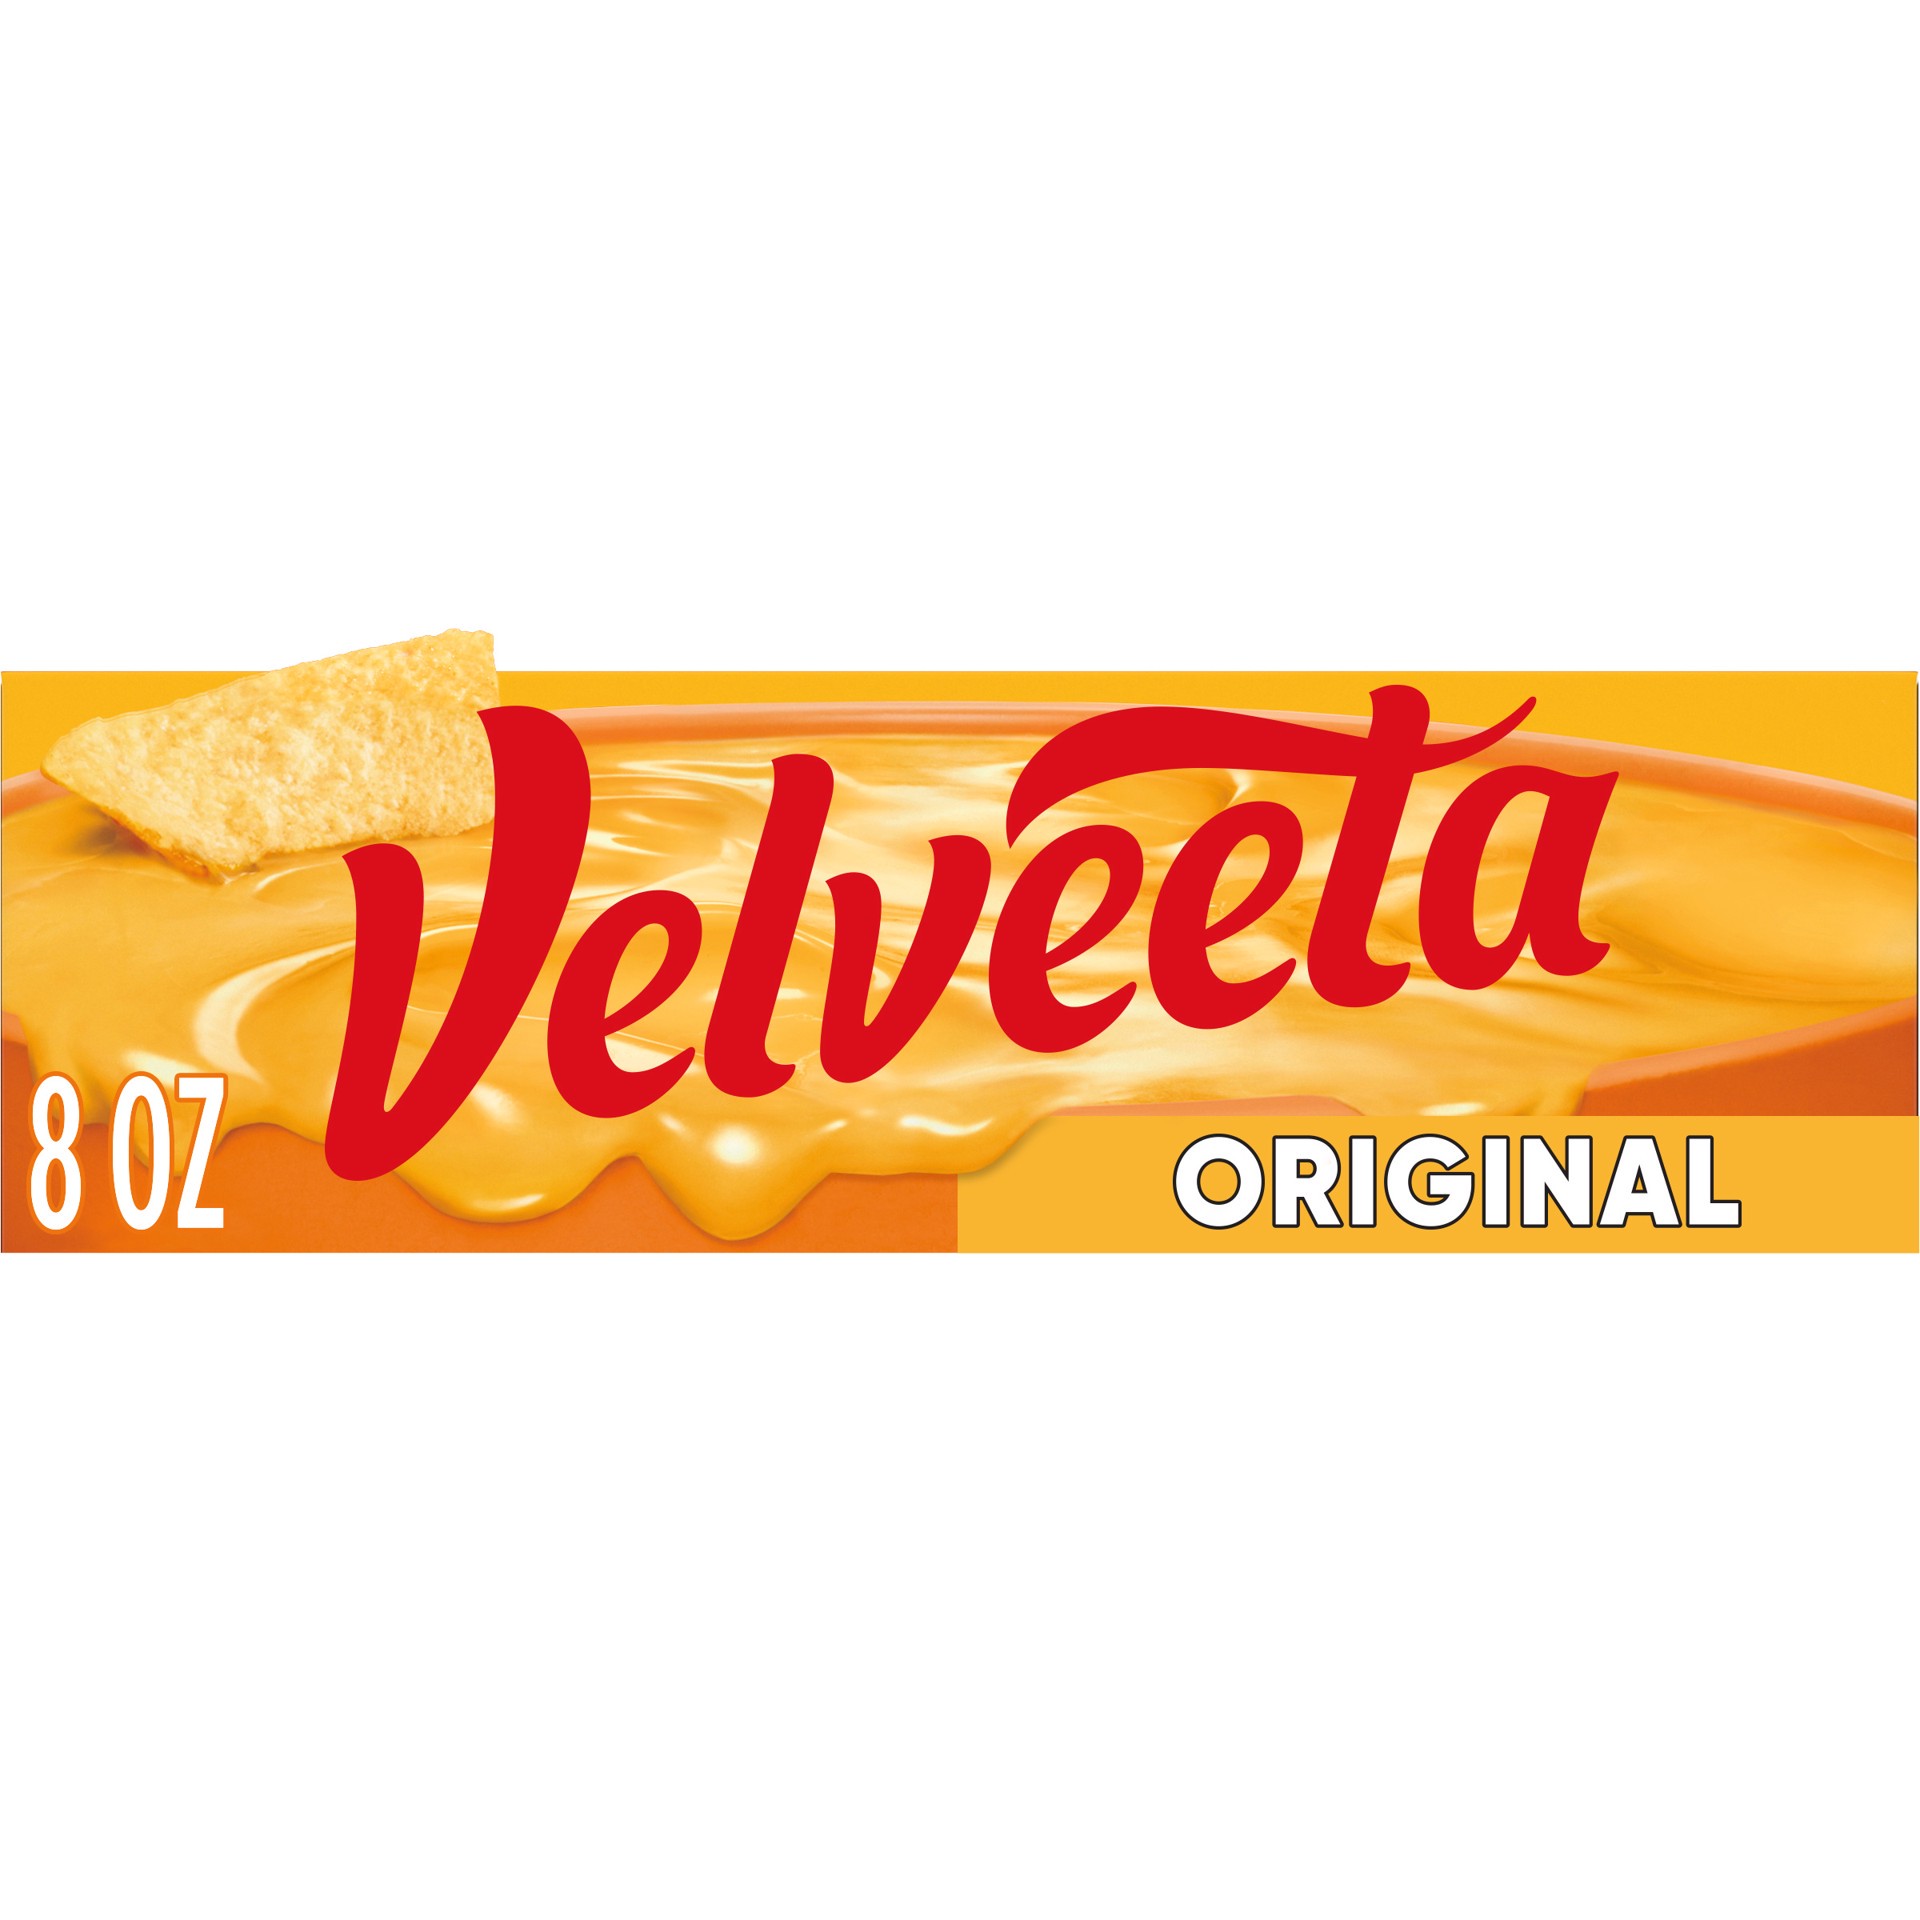 slide 1 of 9, Velveeta Original Pasteurized Recipe Cheese Product, 8 oz Block, 8 oz